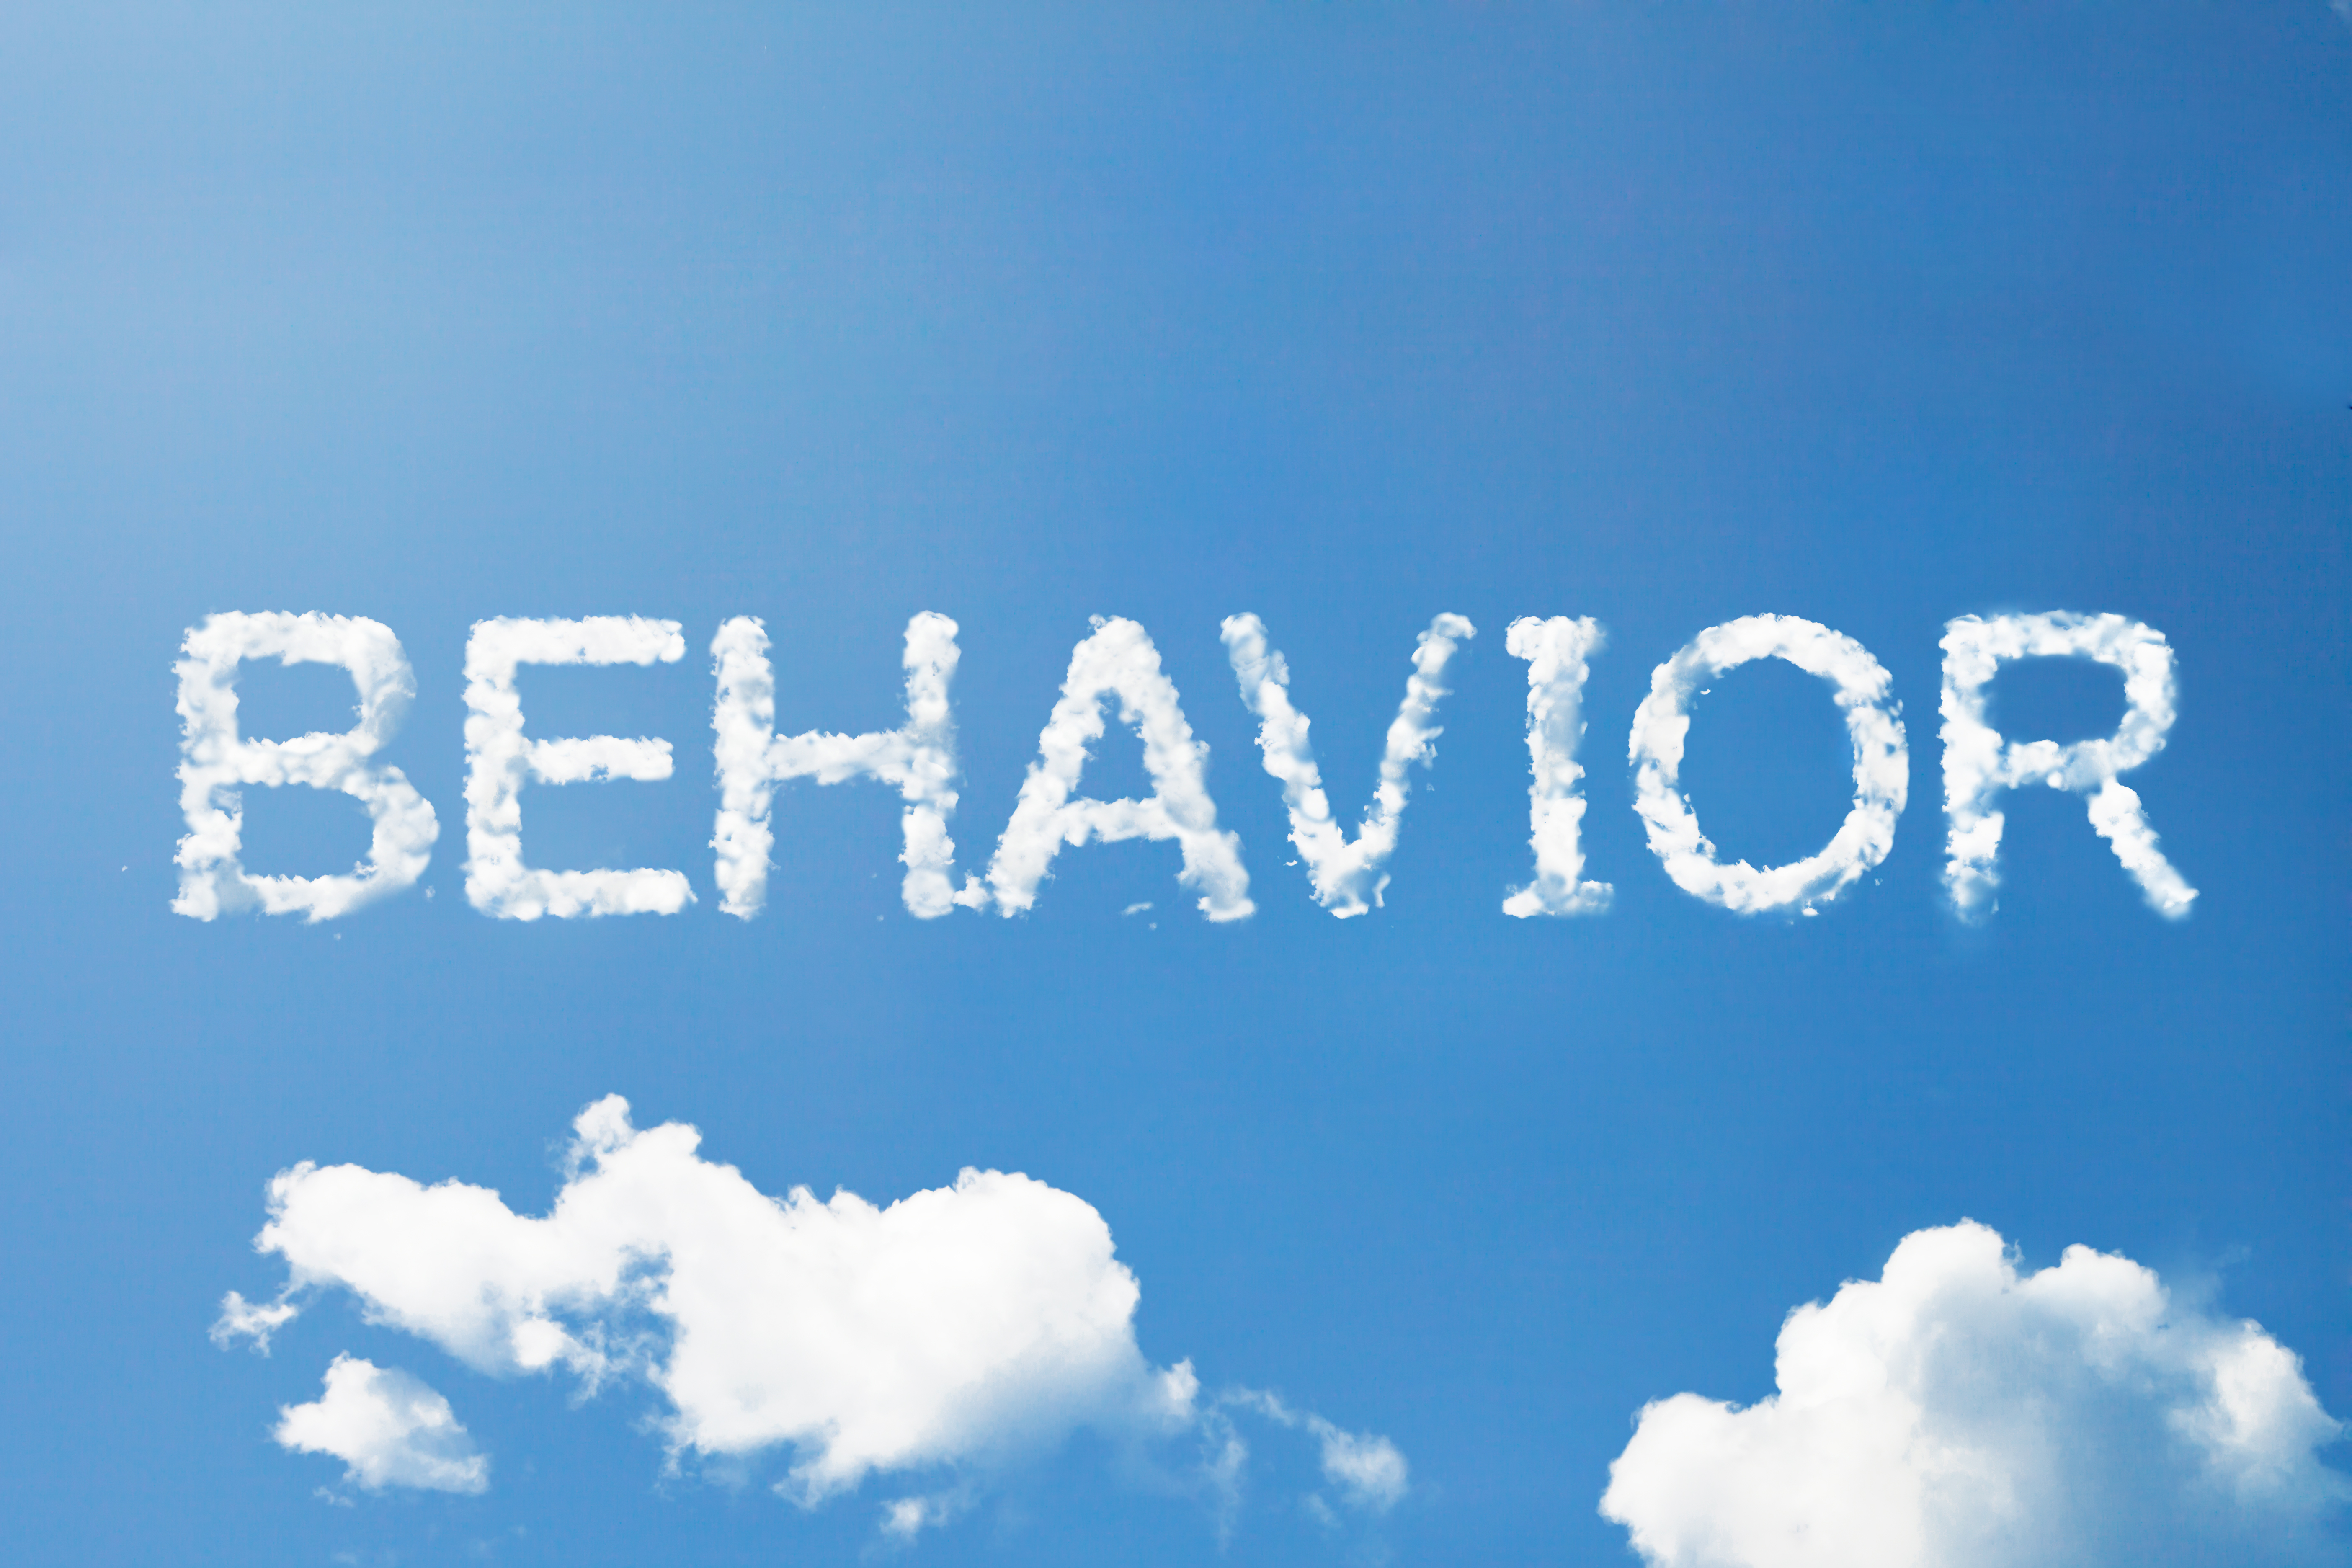 Addressing Challenging Behaviors